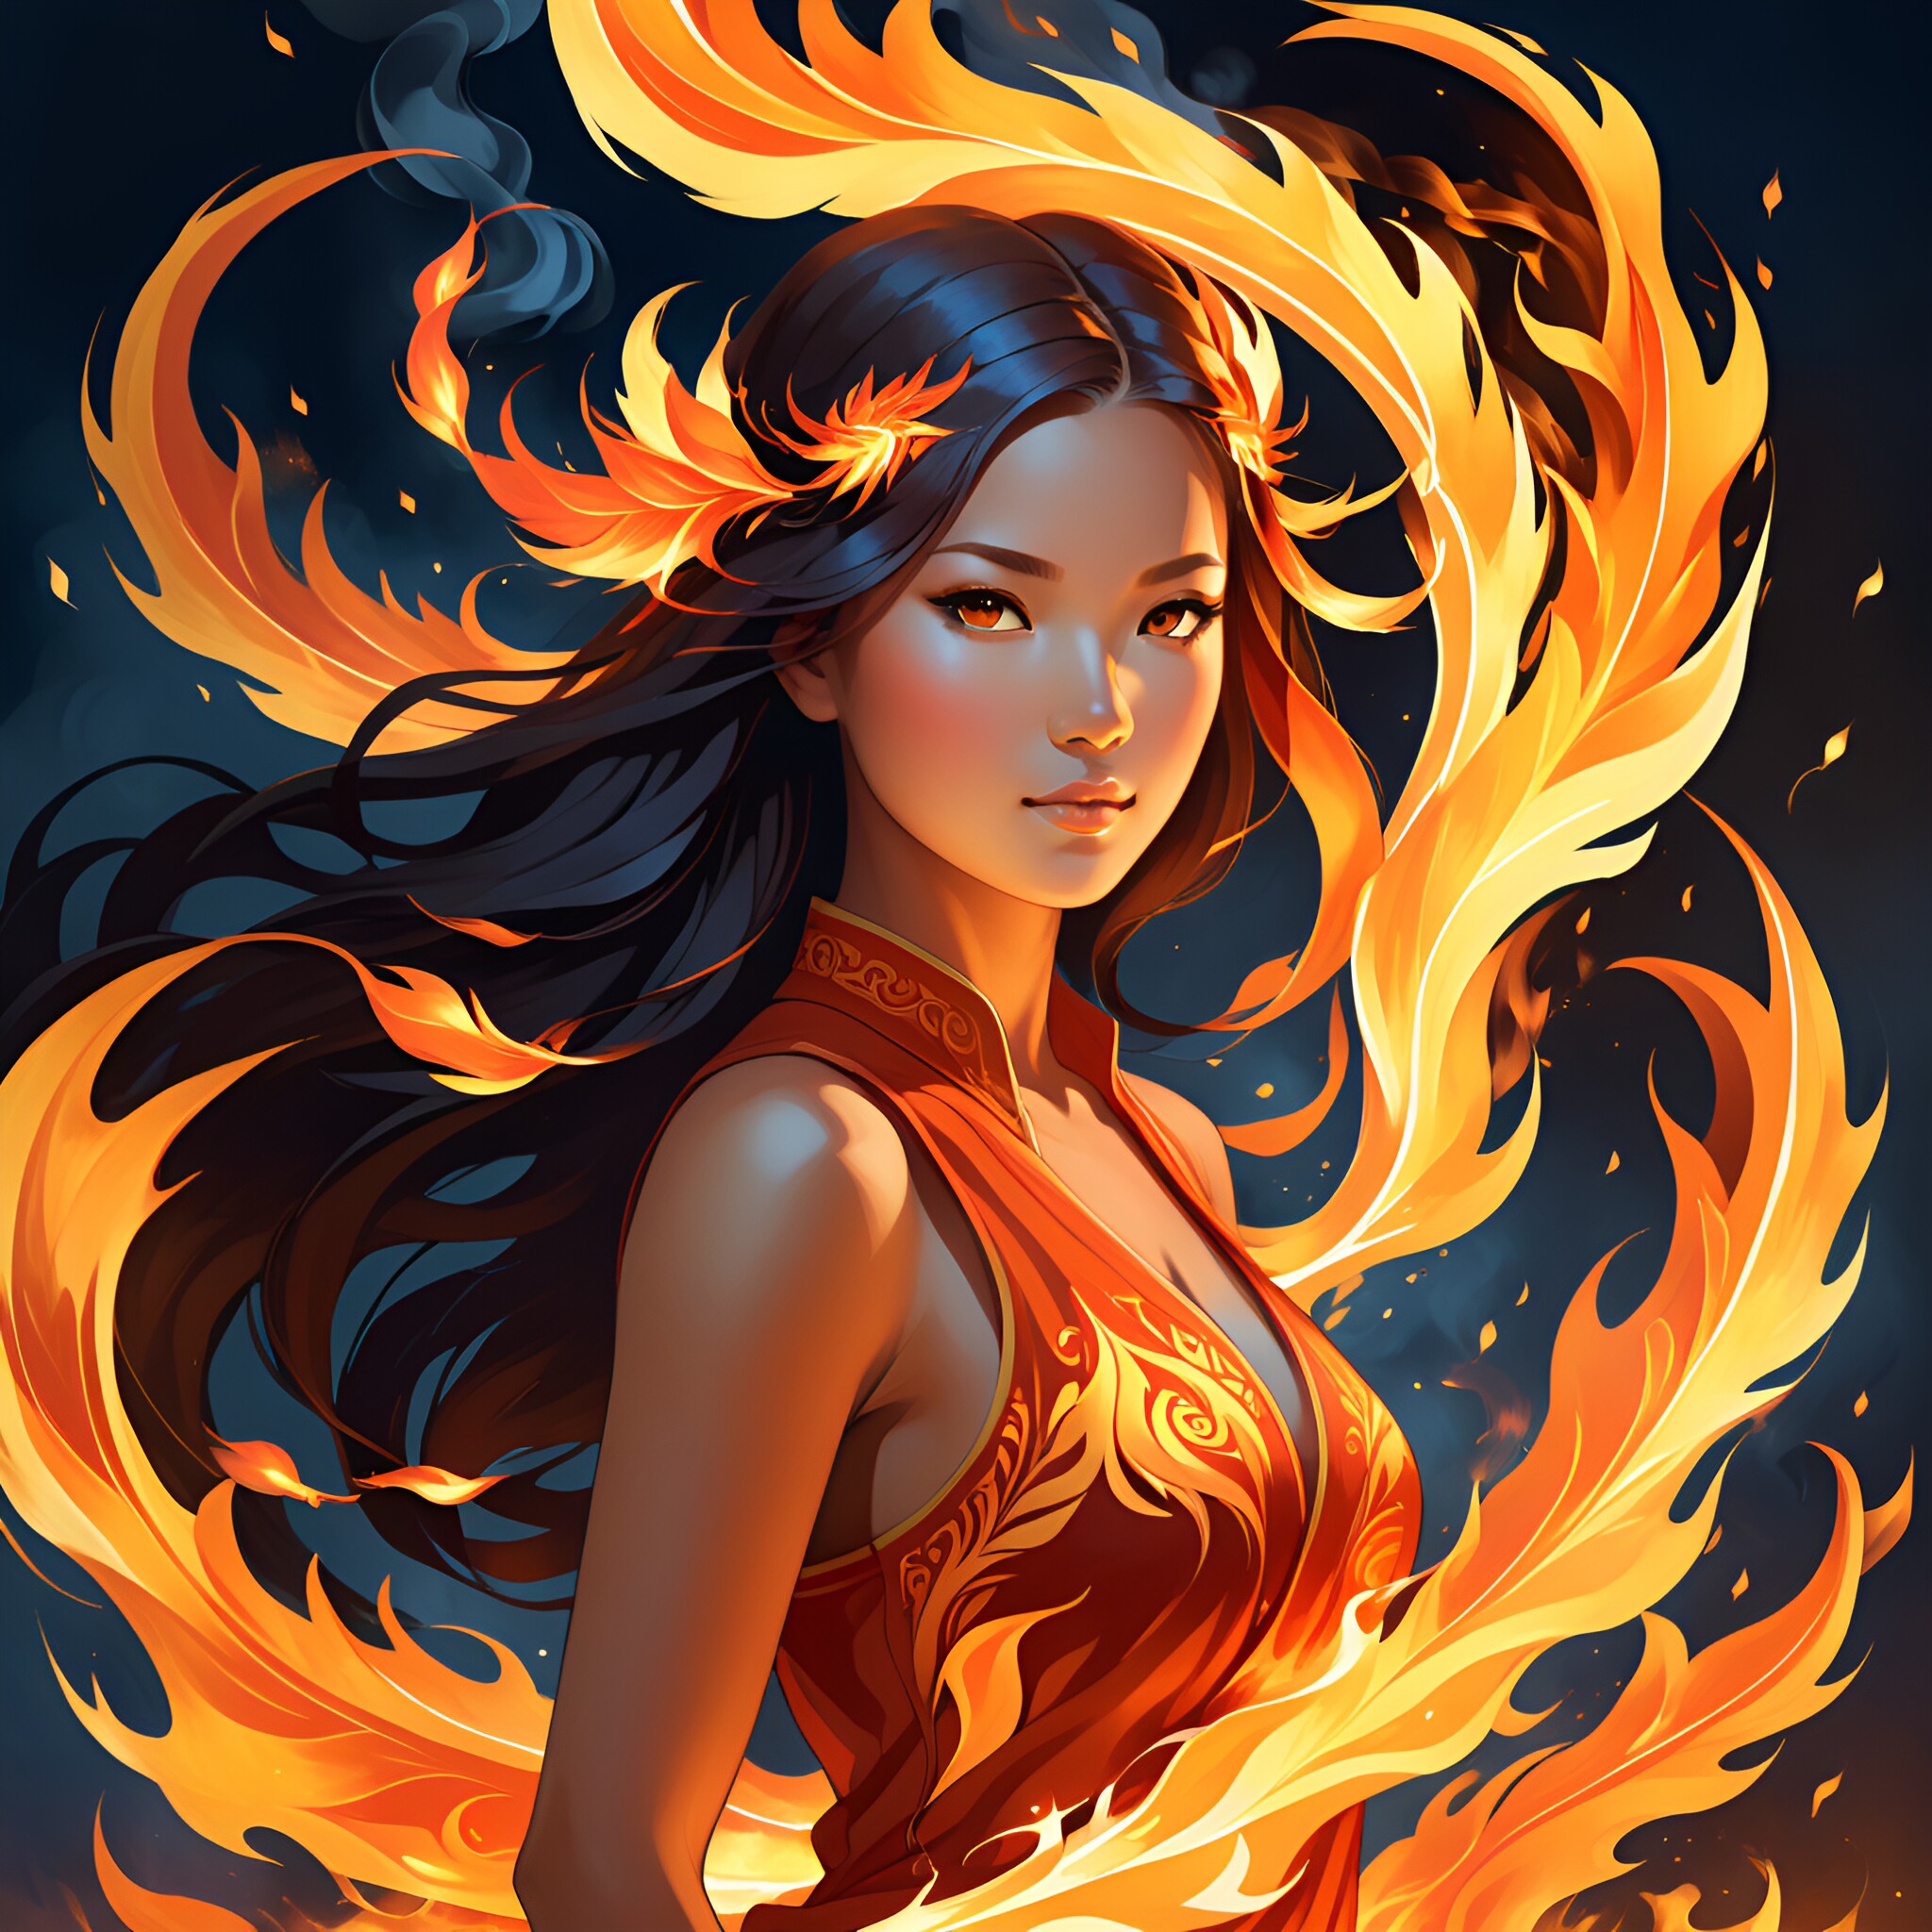 Fire spirit girl